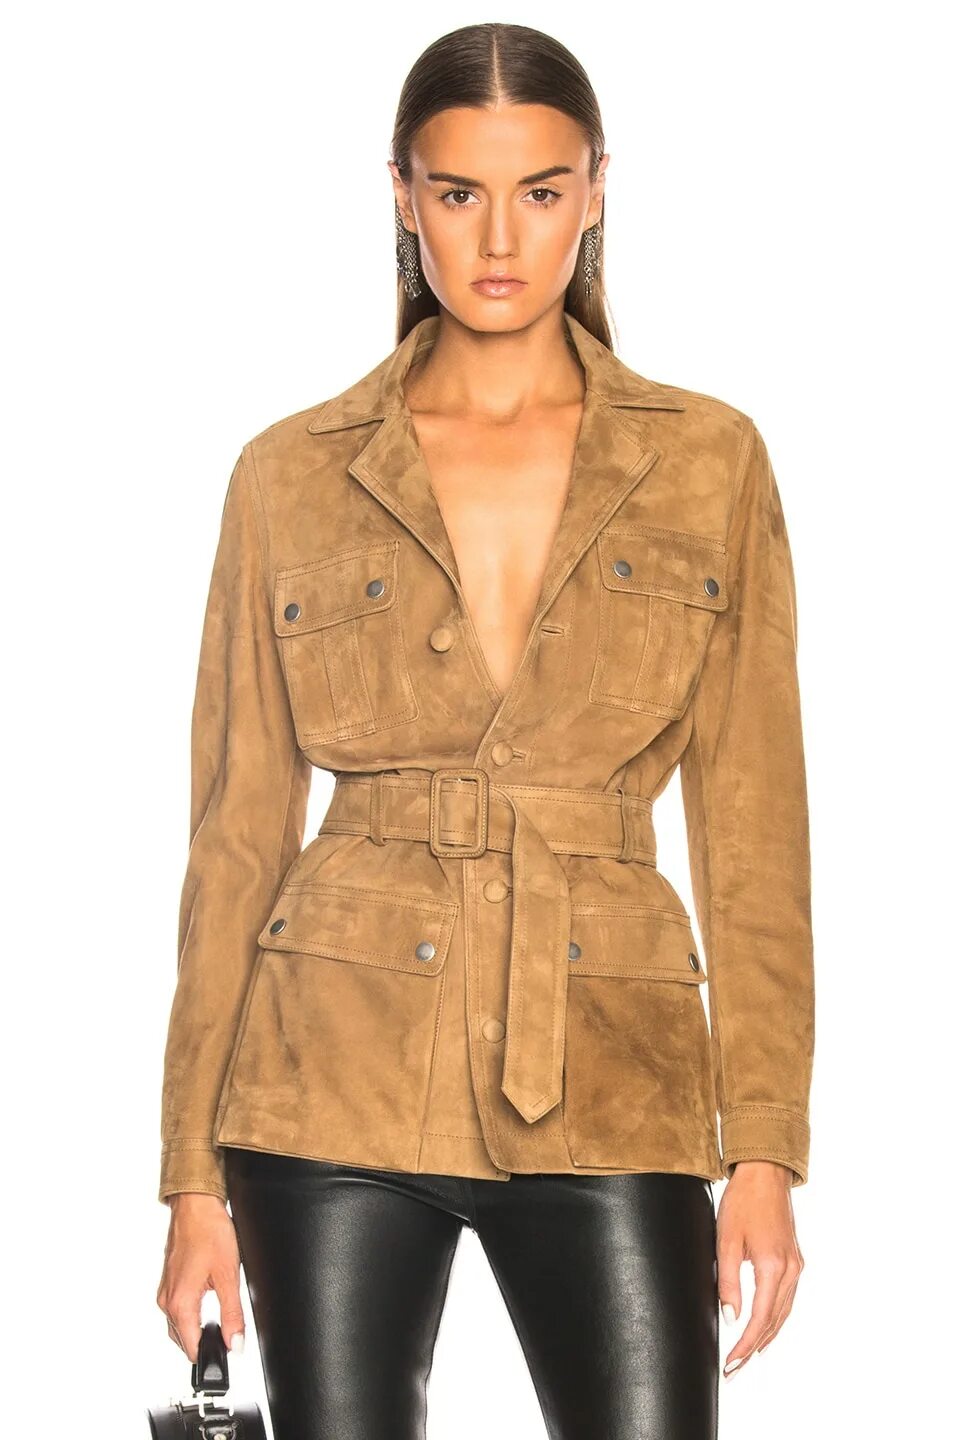 Карманы кожаные куртки. Куртка-сафари YSL. 1920s Safari Jacket кожаная куртка. Saint Laurent жакет сафари. Кожанка Ив сен Лоран.